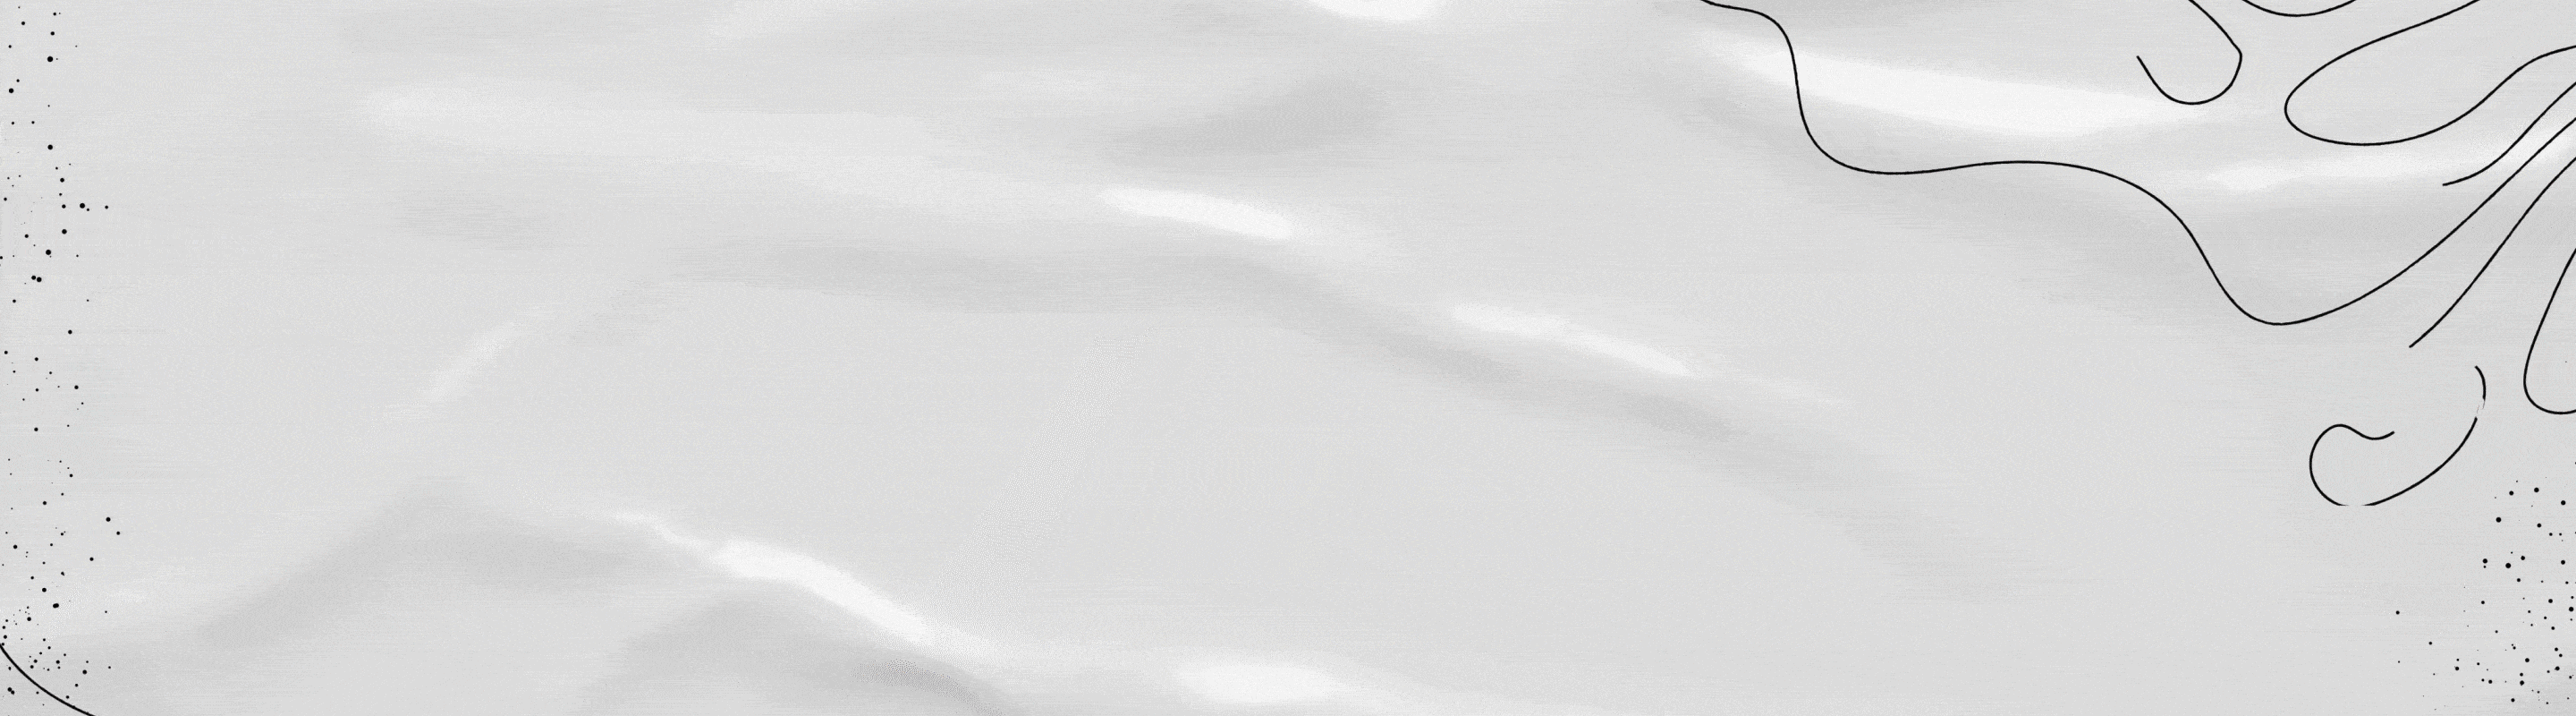 White Background